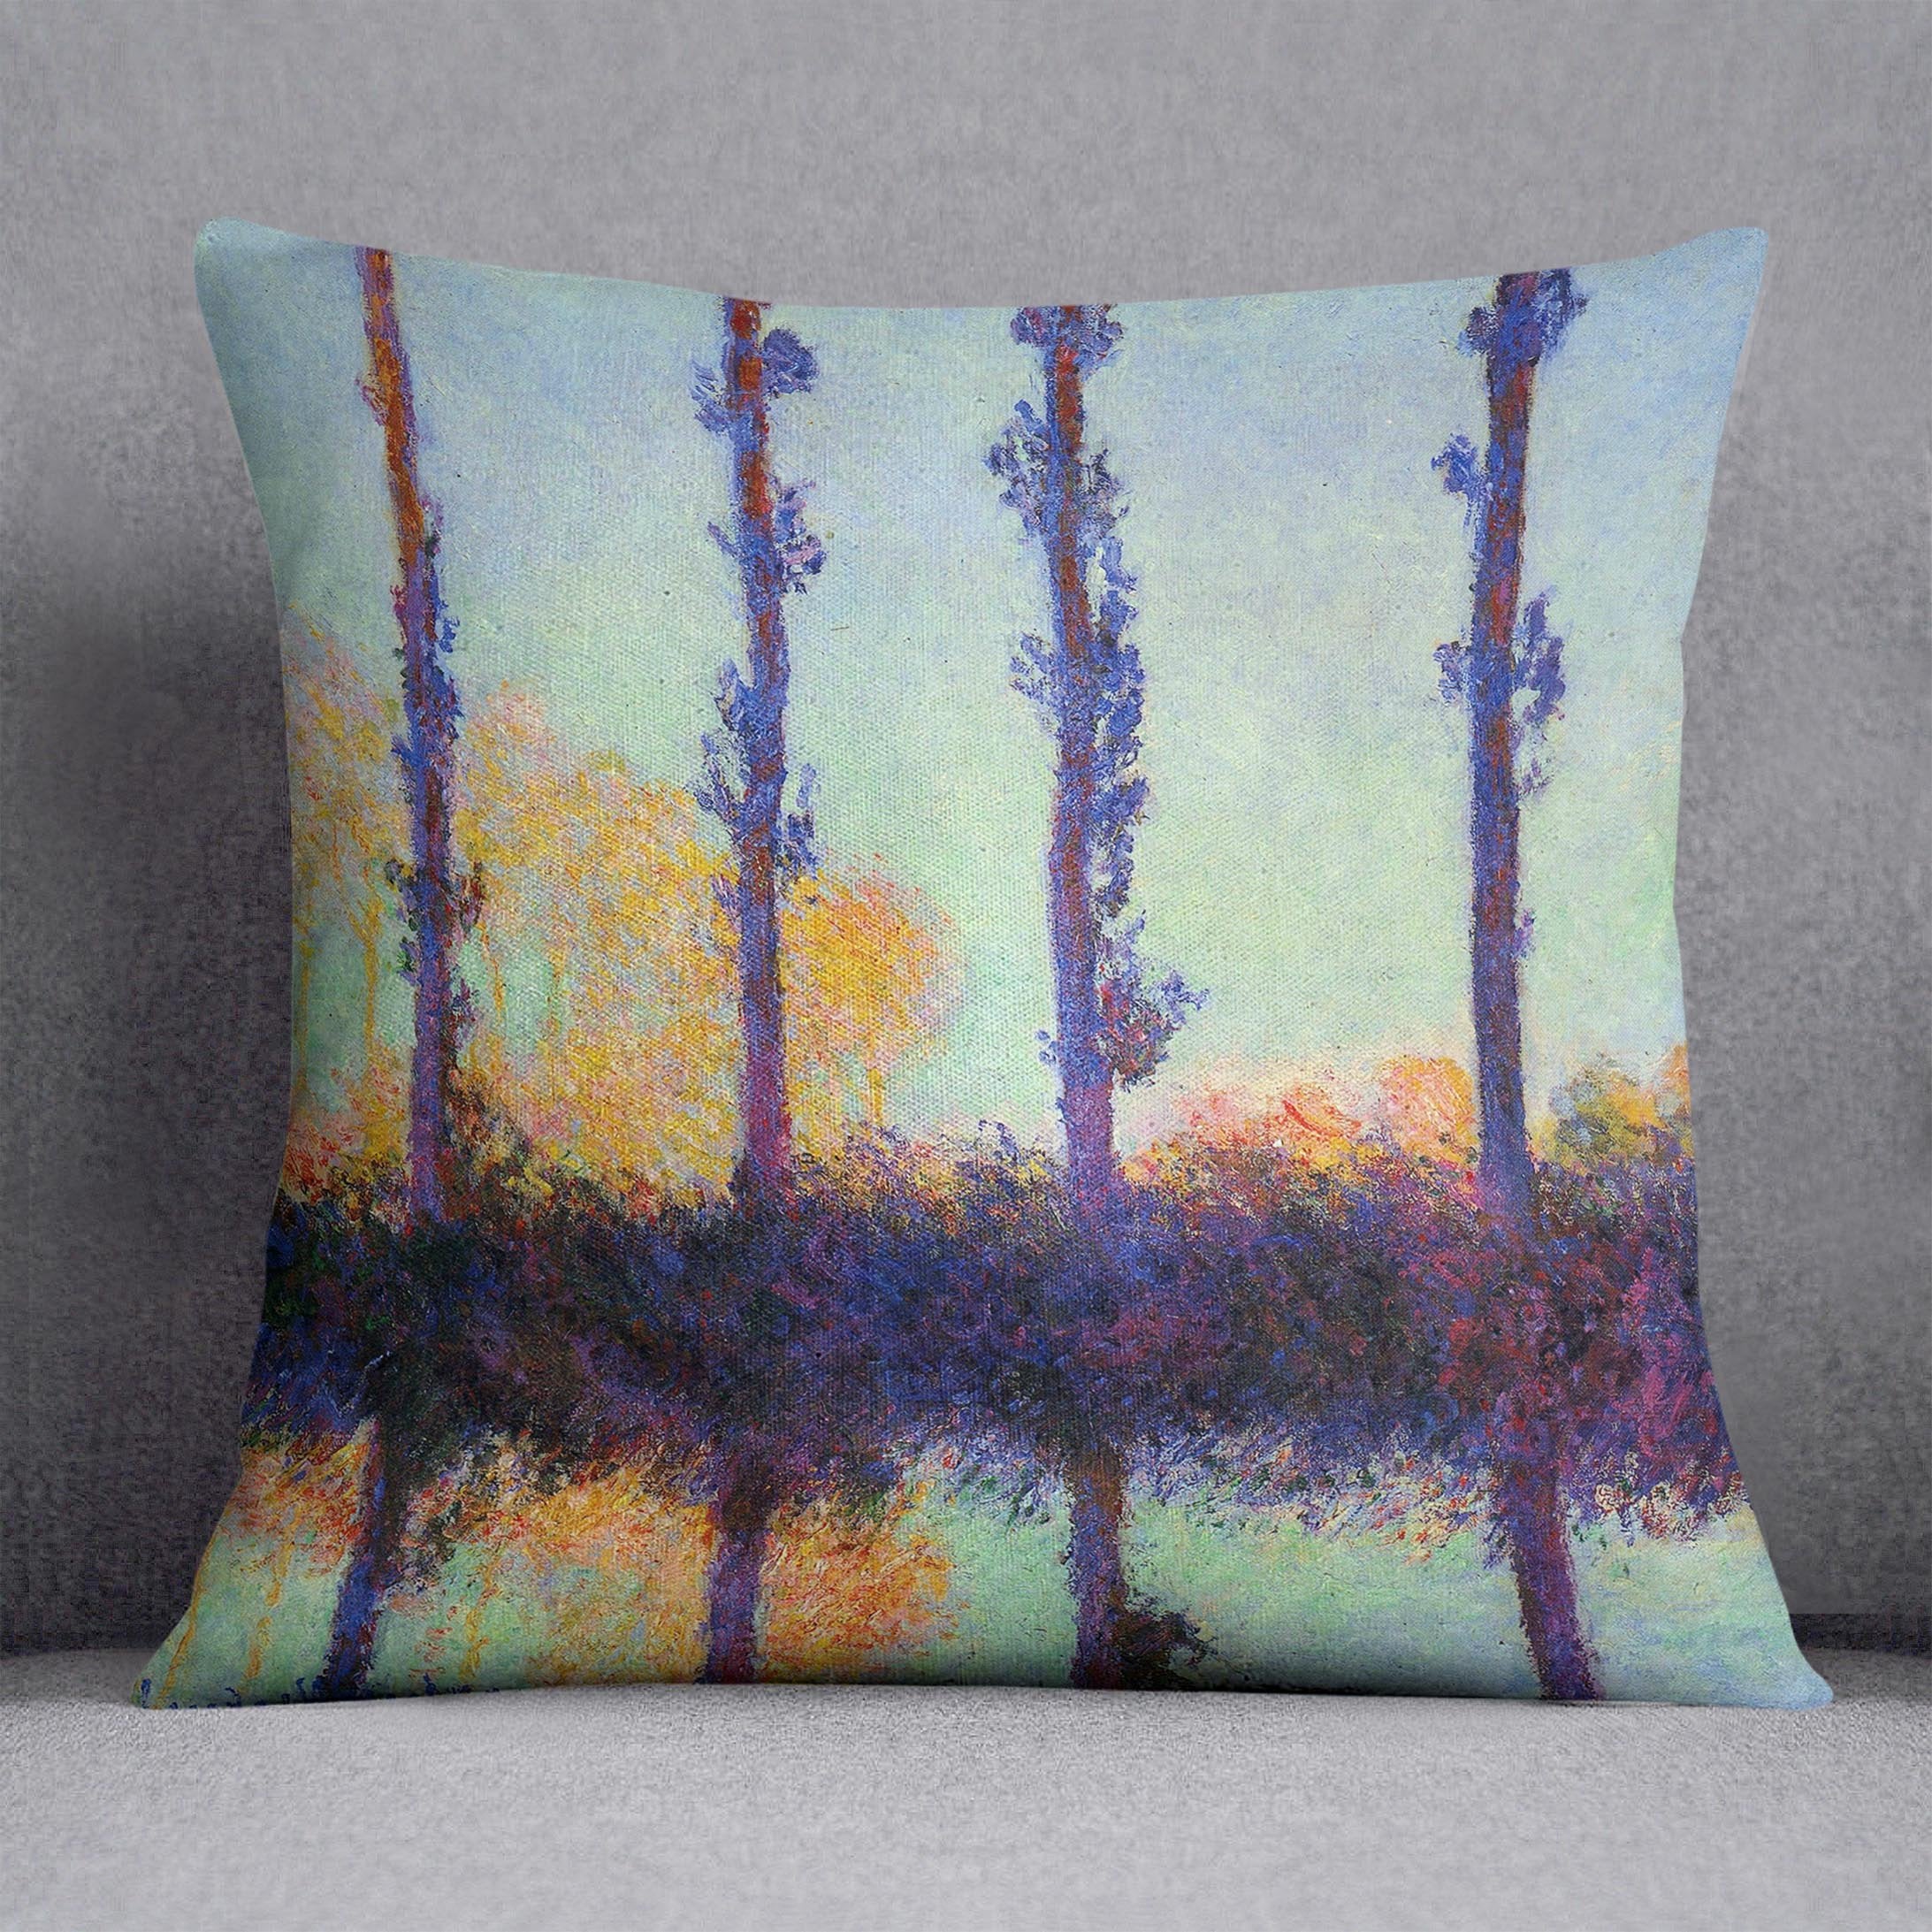 Four poplars by Monet Throw Pillow